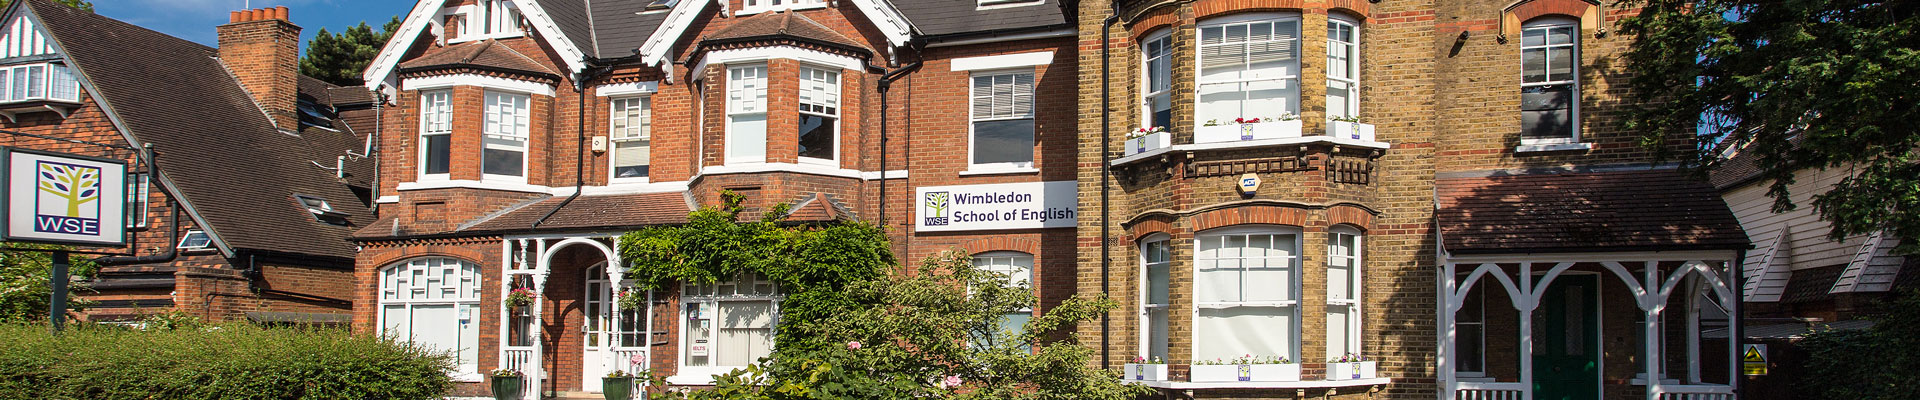 Wimbledon School of English görseli